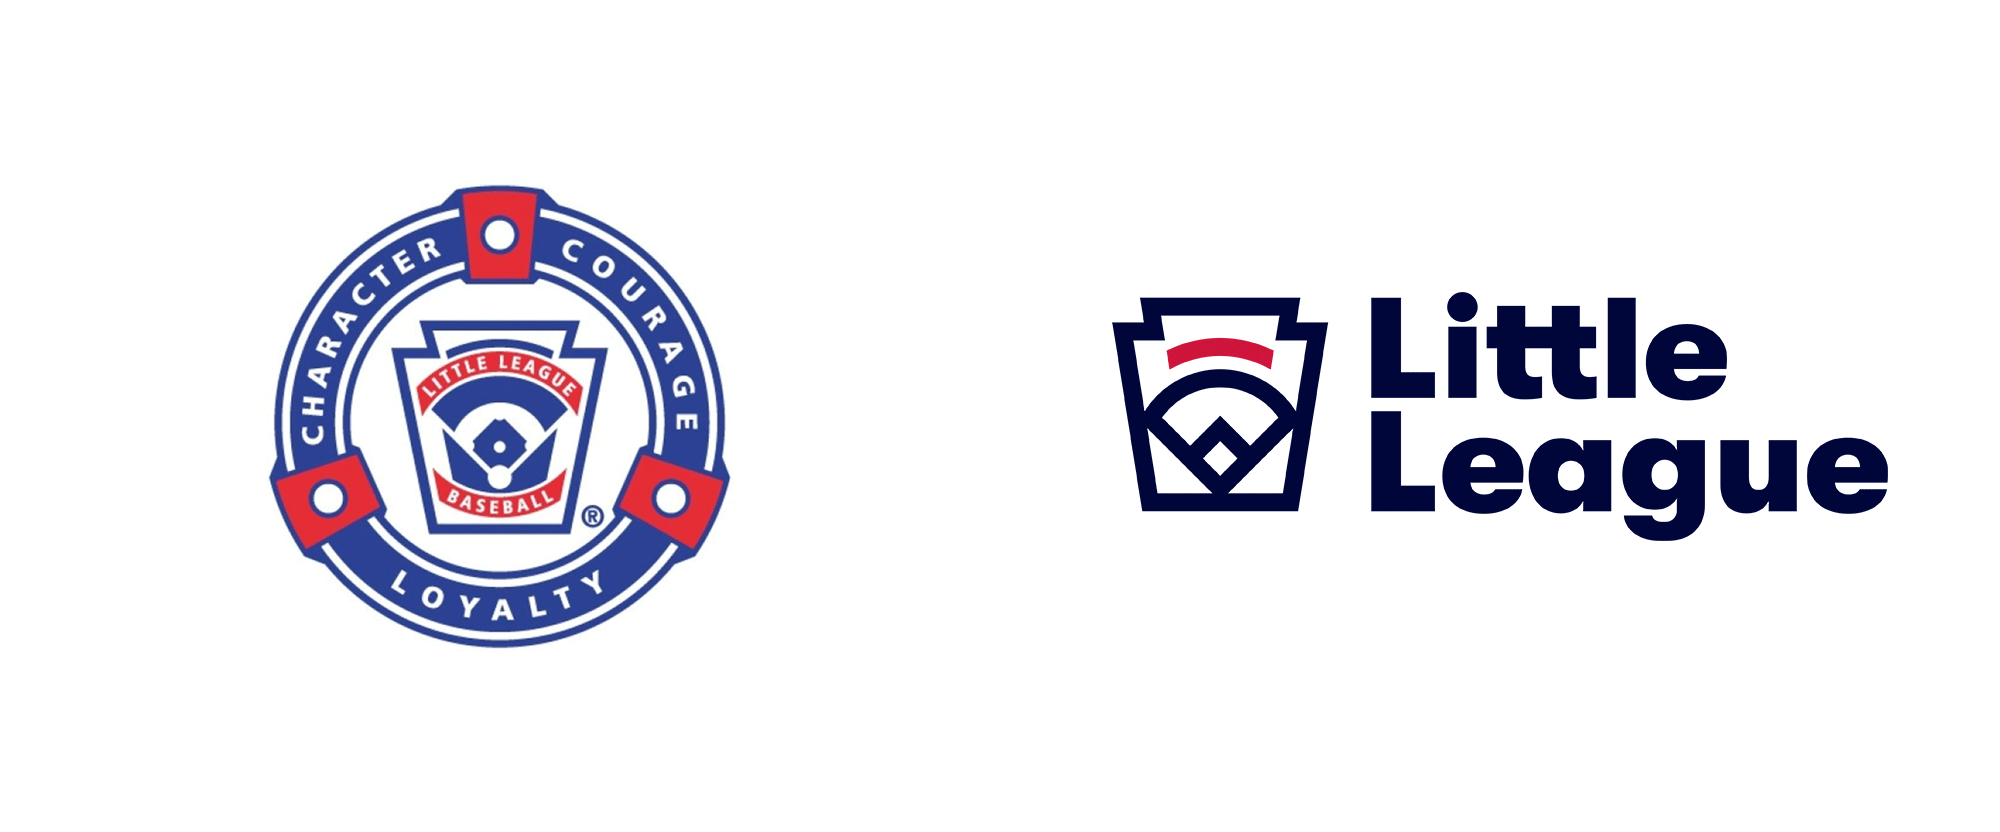 College Baseball Uniforms - 2019 - Page 2 - Sports Logo News - Chris  Creamer's Sports Logos Community - CCSLC - SportsLogos.Net Forums